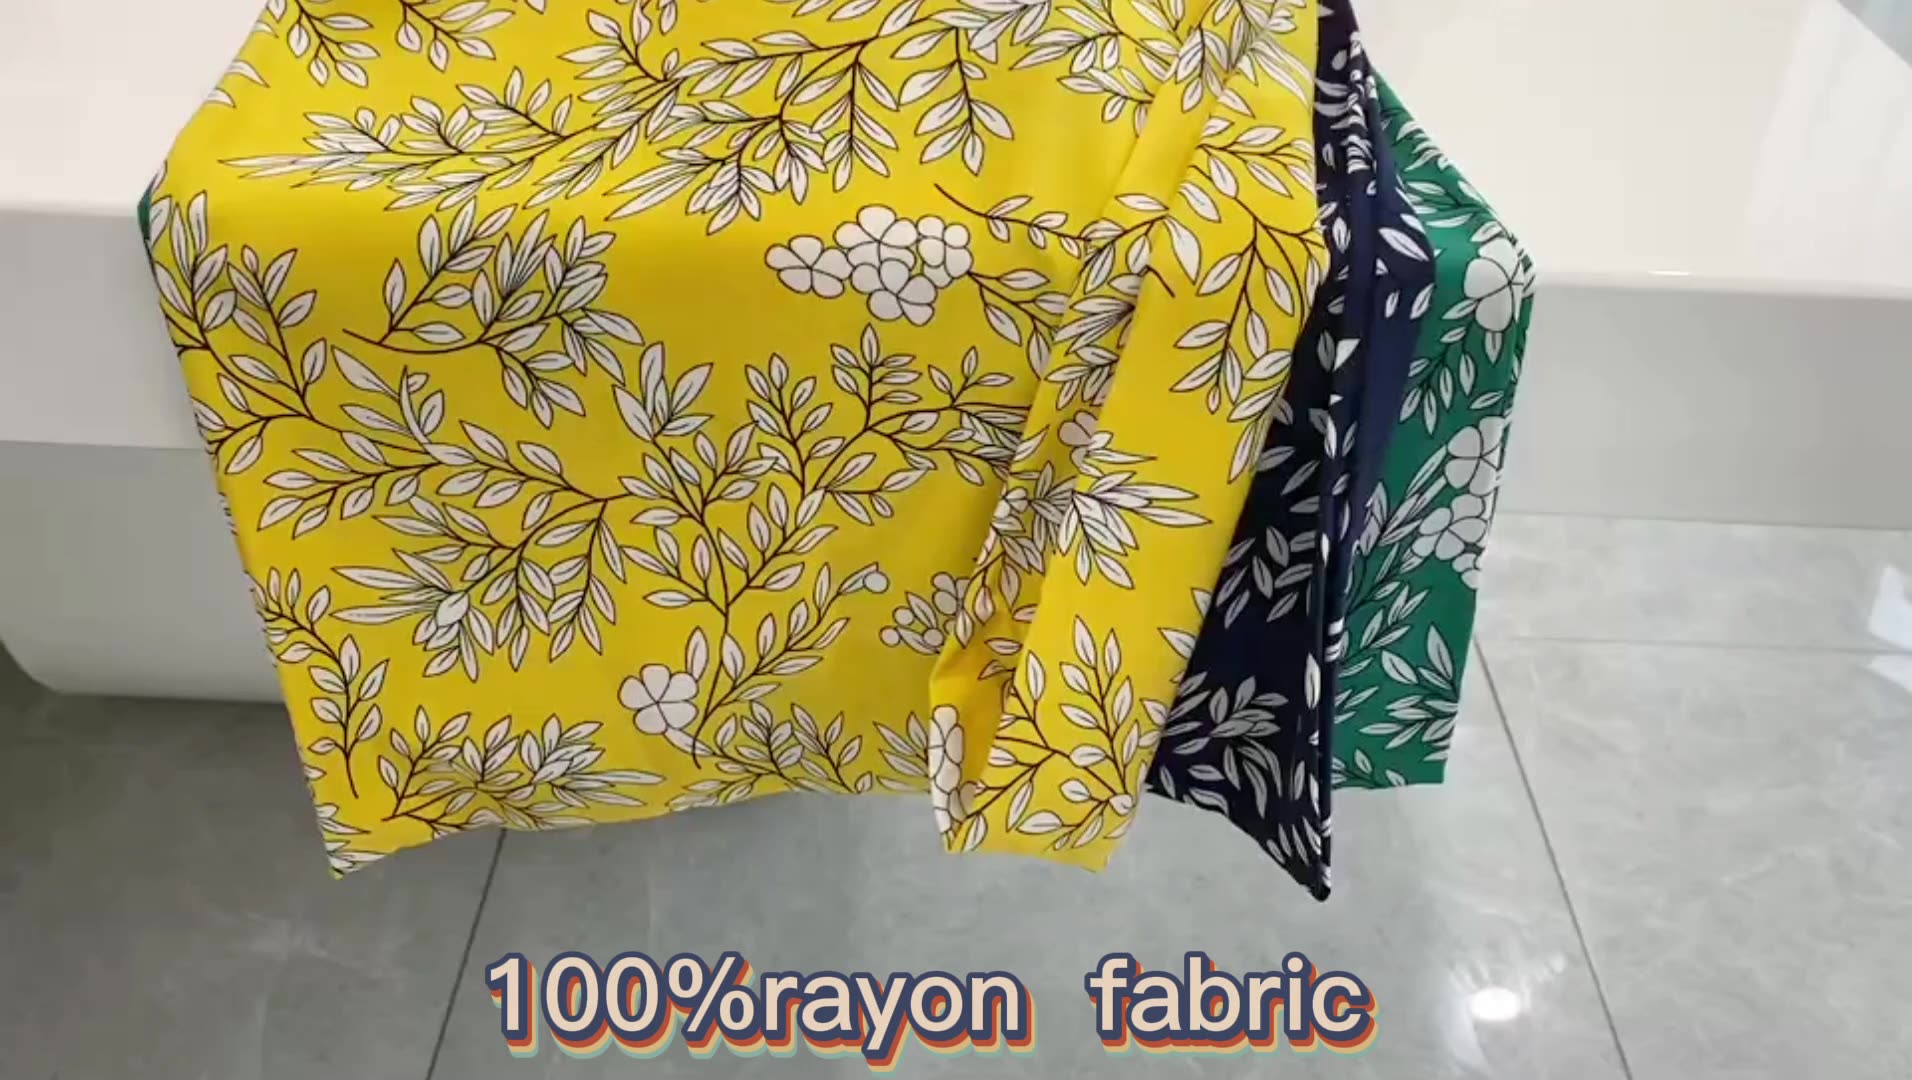 Spun woven rayon challis fabric floral viscose material tropical printed 100% viscose rayon fabric for dress shirt1